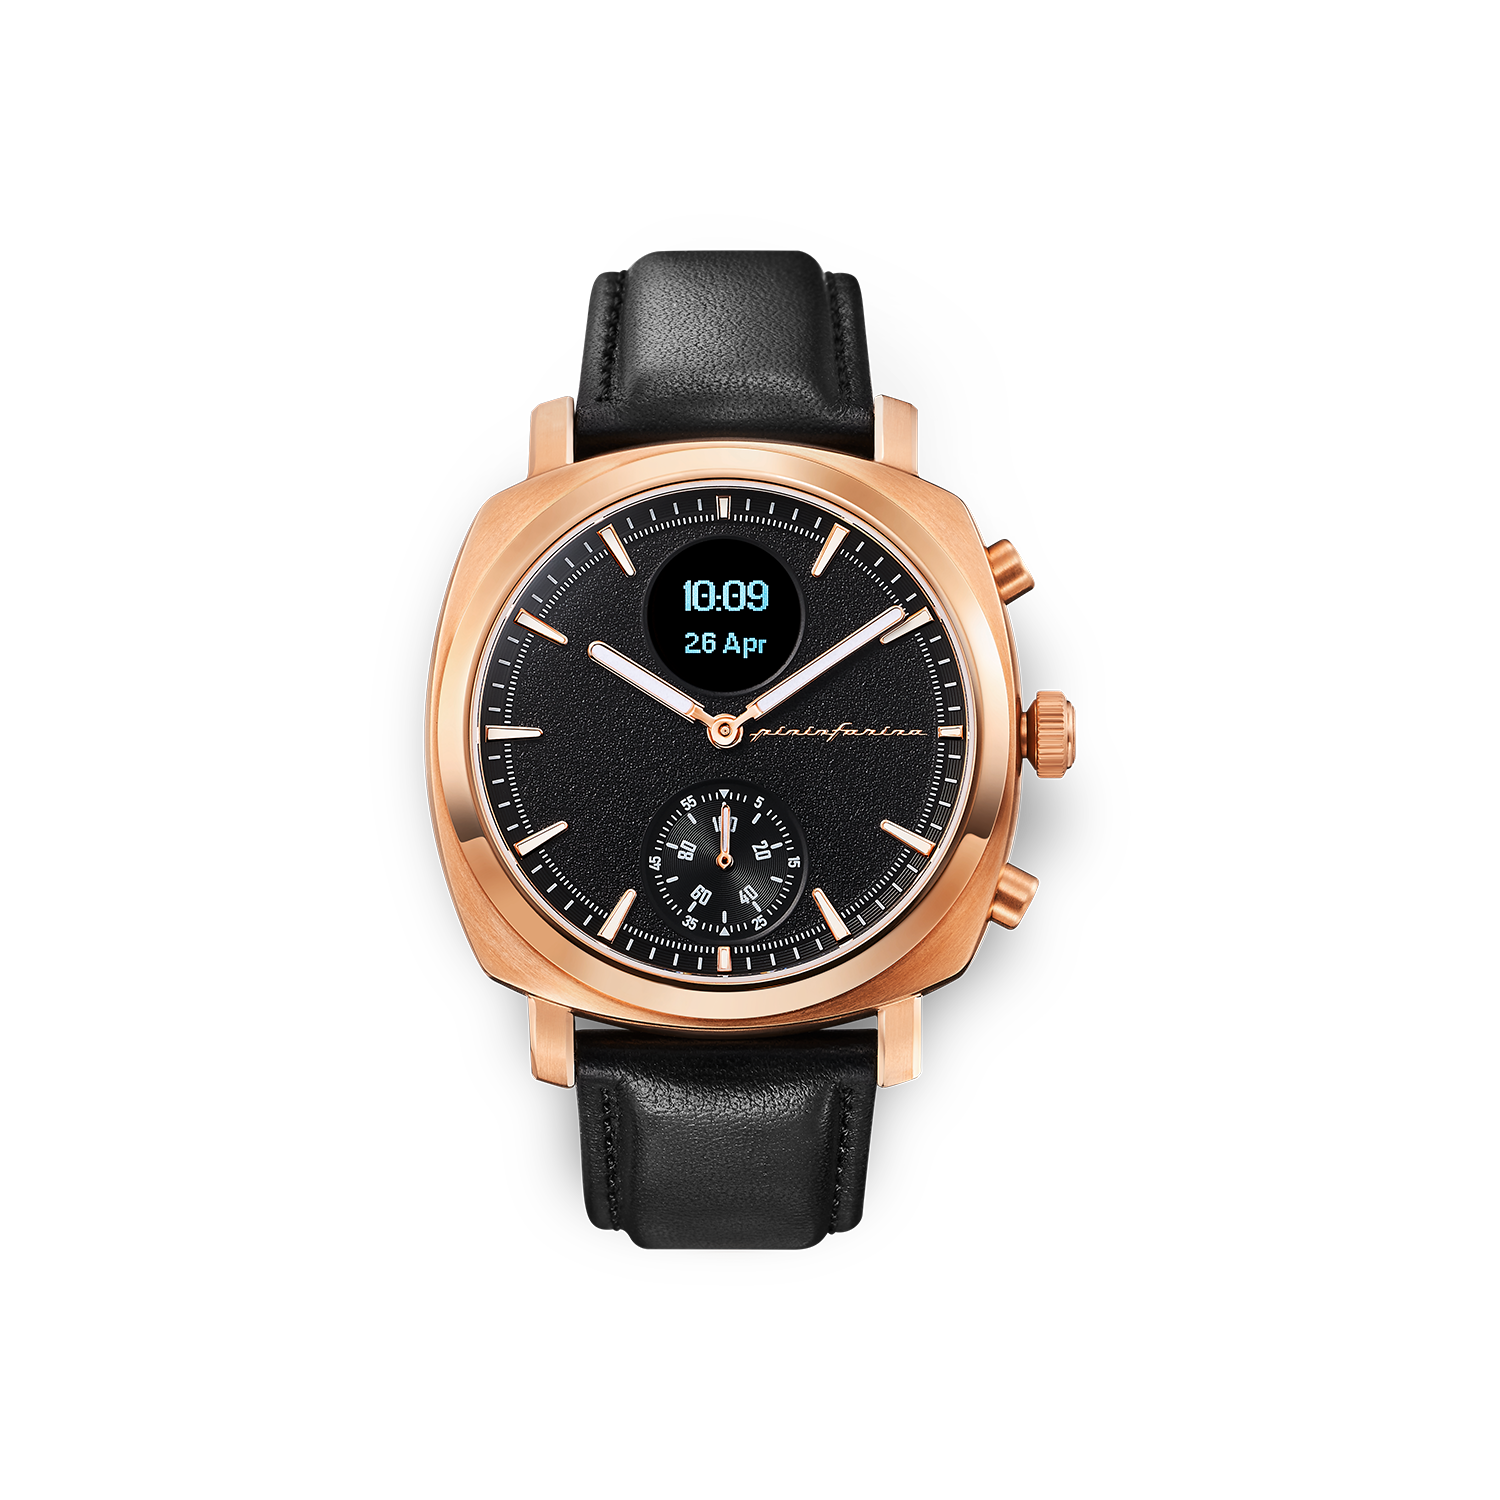 PININFARINA Senso Hybrid – gold Rose Smartwatch leather, digitalem Genuine Display Analoge it